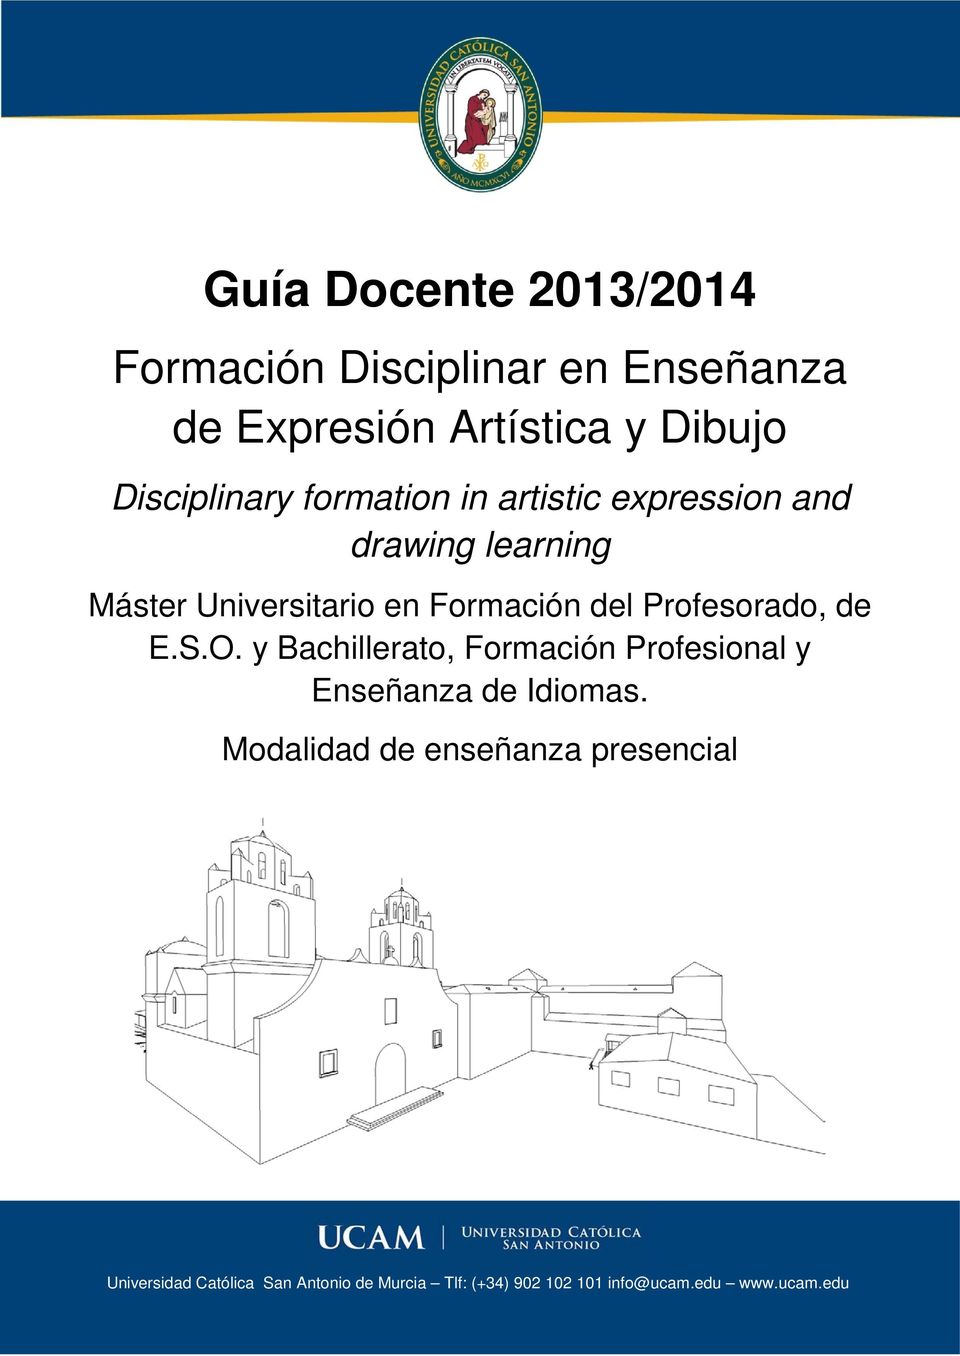 del Profesorado, de E.S.O. y Bachillerato, Formación Profesional y Enseñanza de Idiomas.